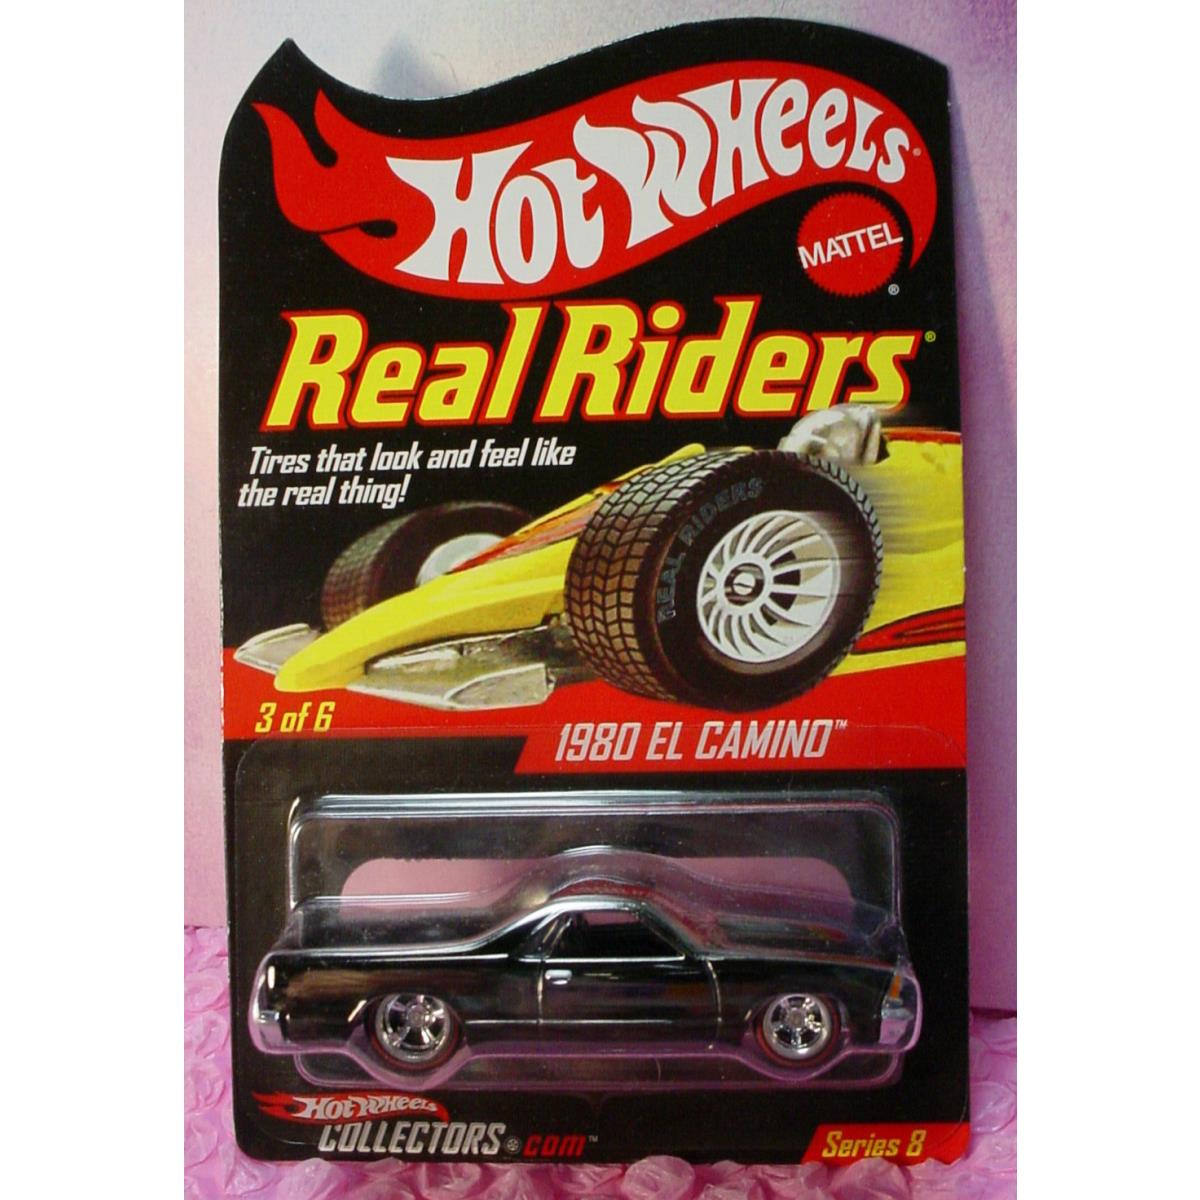 2009 Rlc Hot Wheels Real Riders 1980 EL Camino Black Series 8 06181/07500